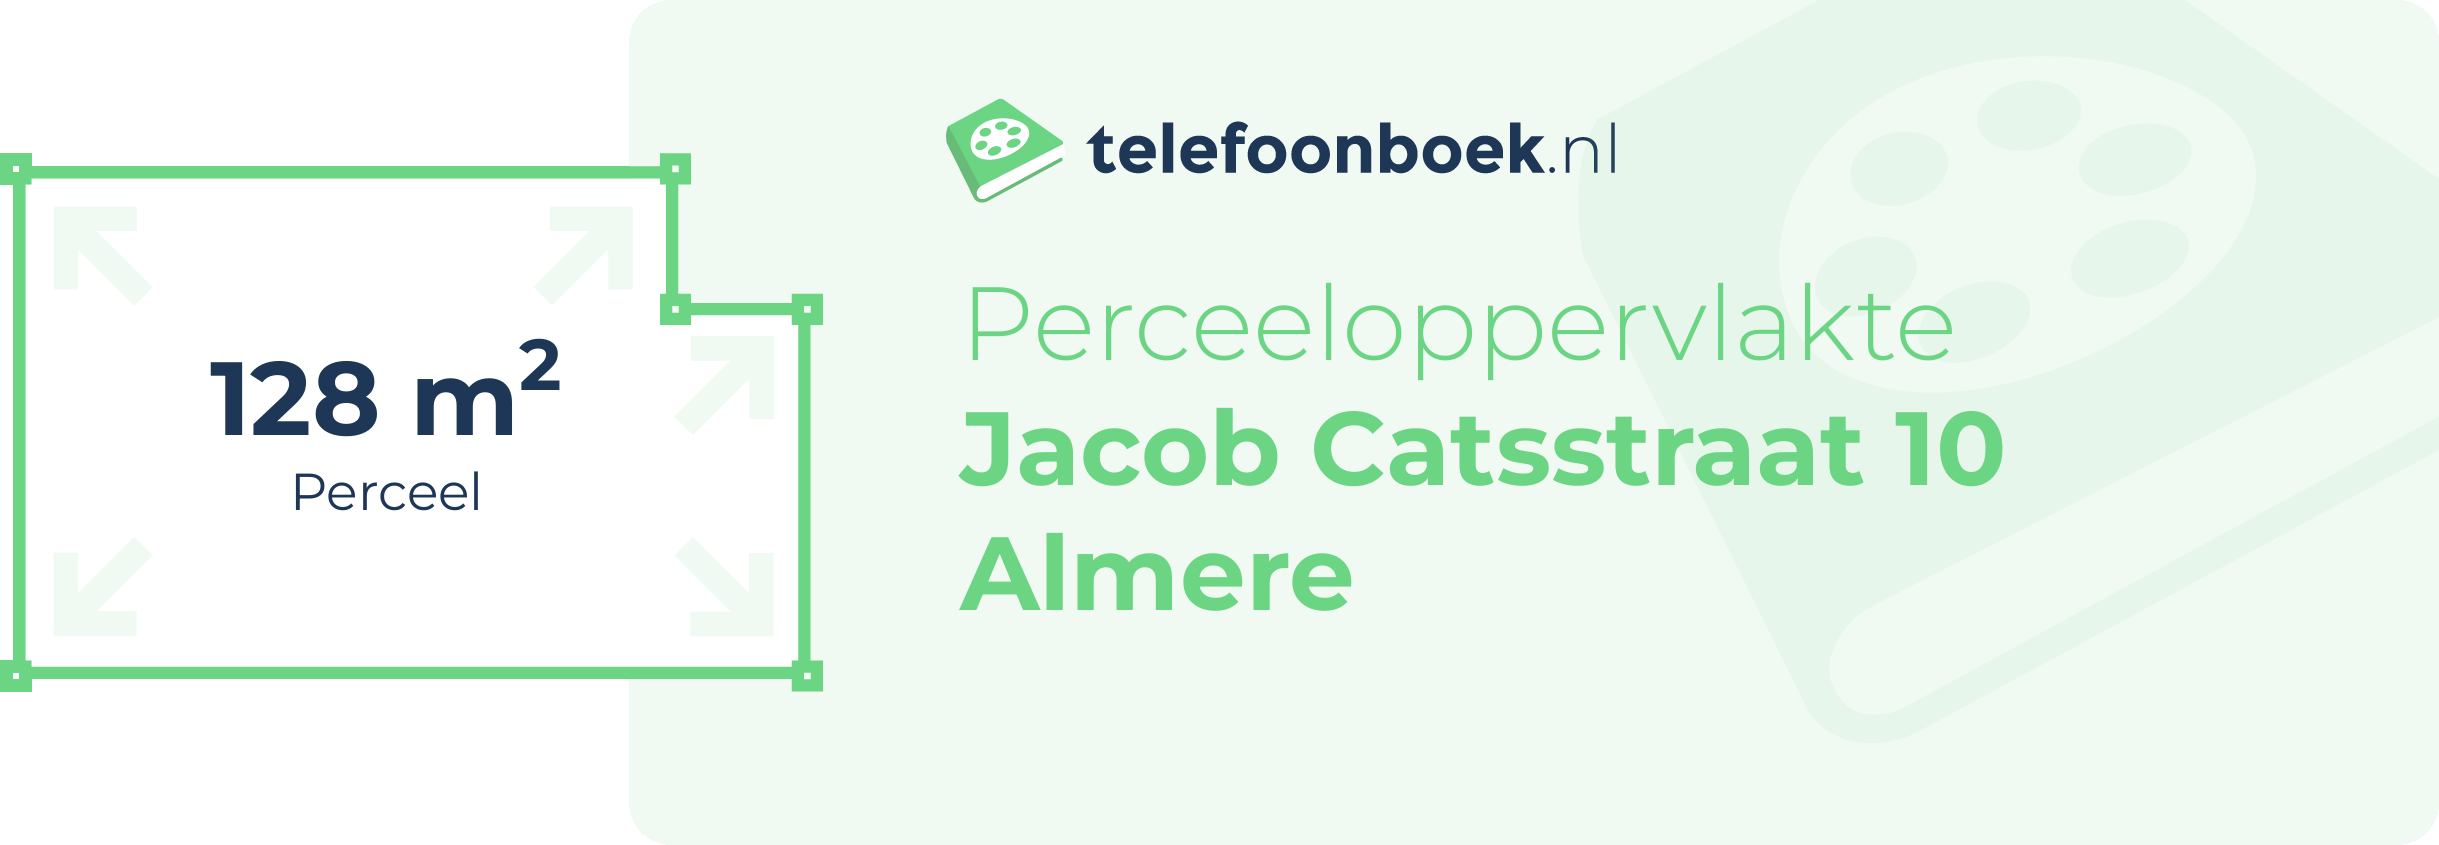 Perceeloppervlakte Jacob Catsstraat 10 Almere